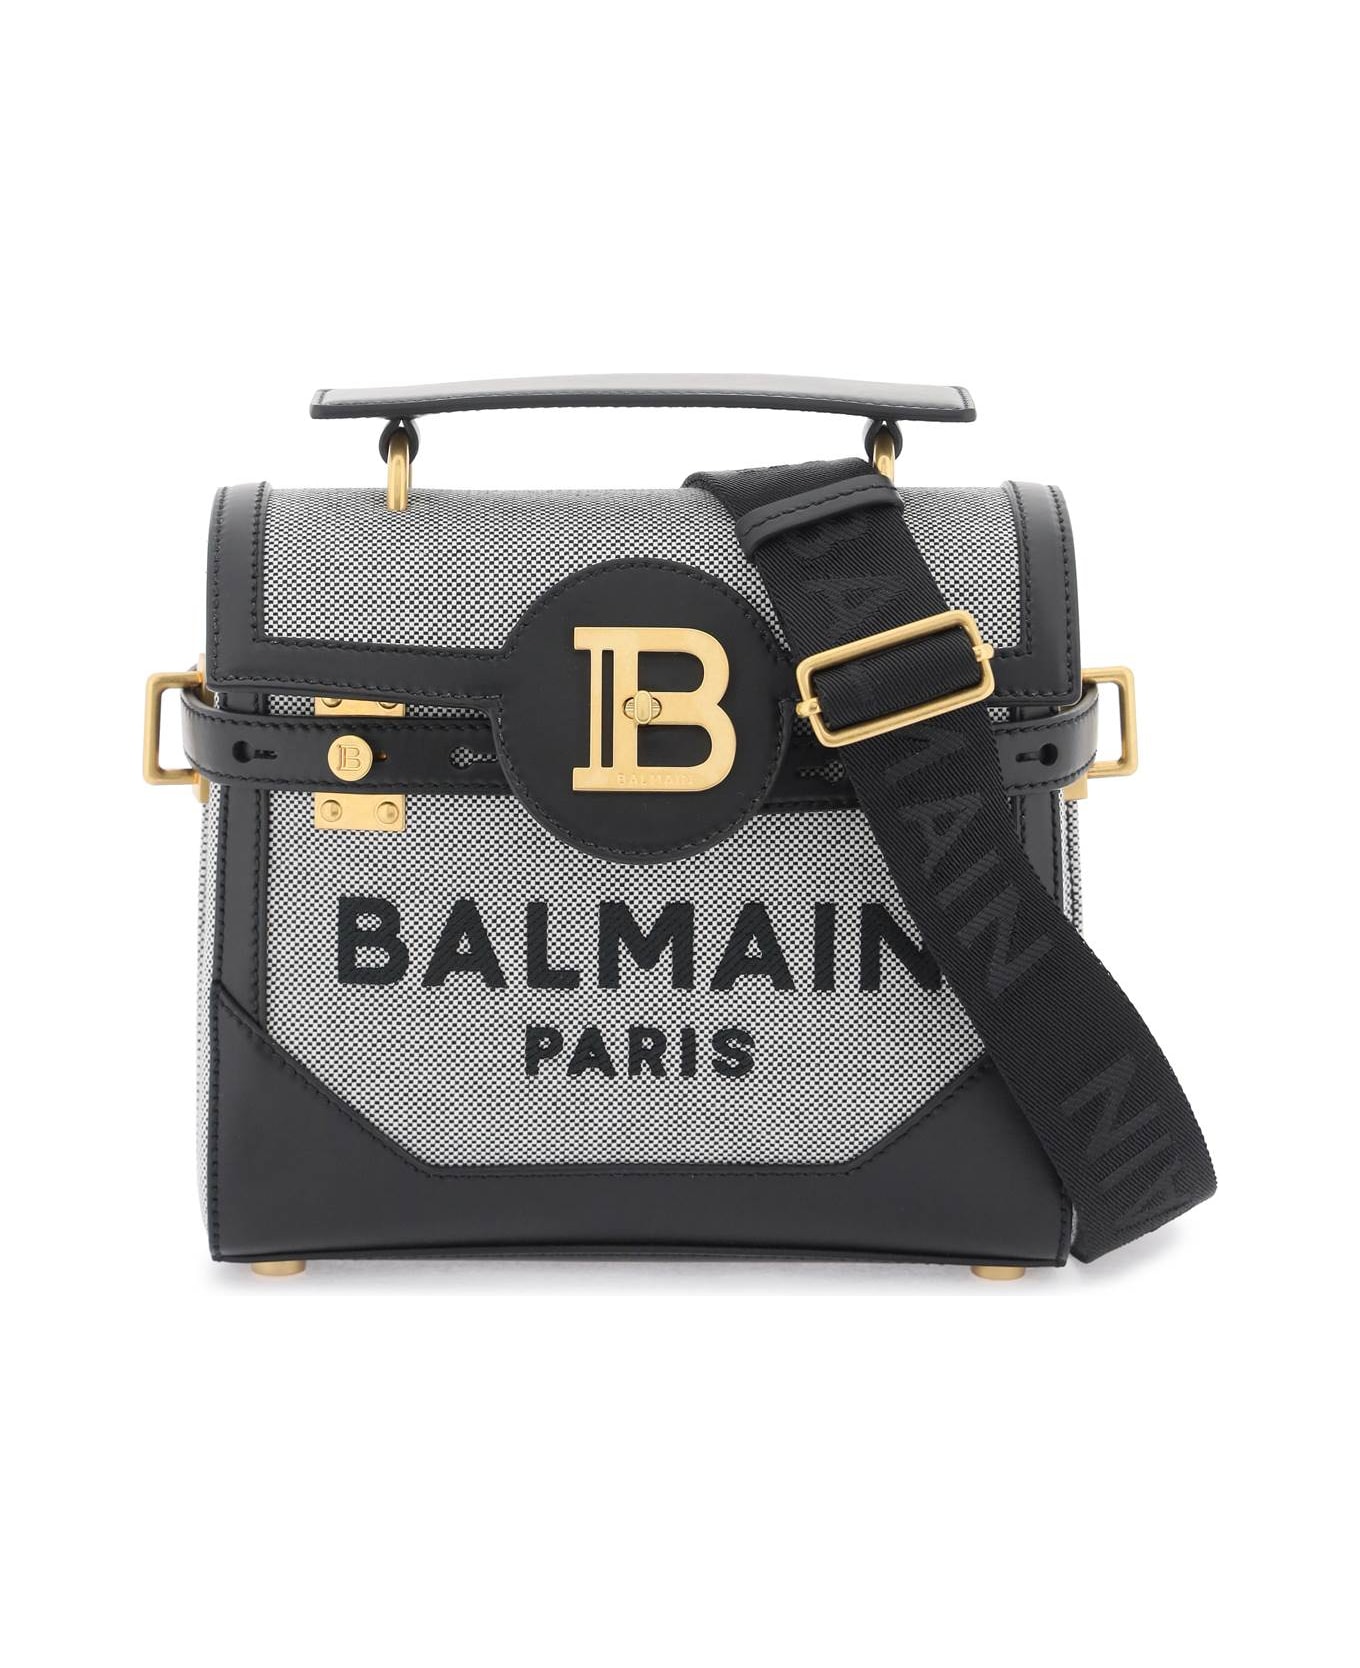 Balmain B-buzz 23 Handbag - Noir/blanc